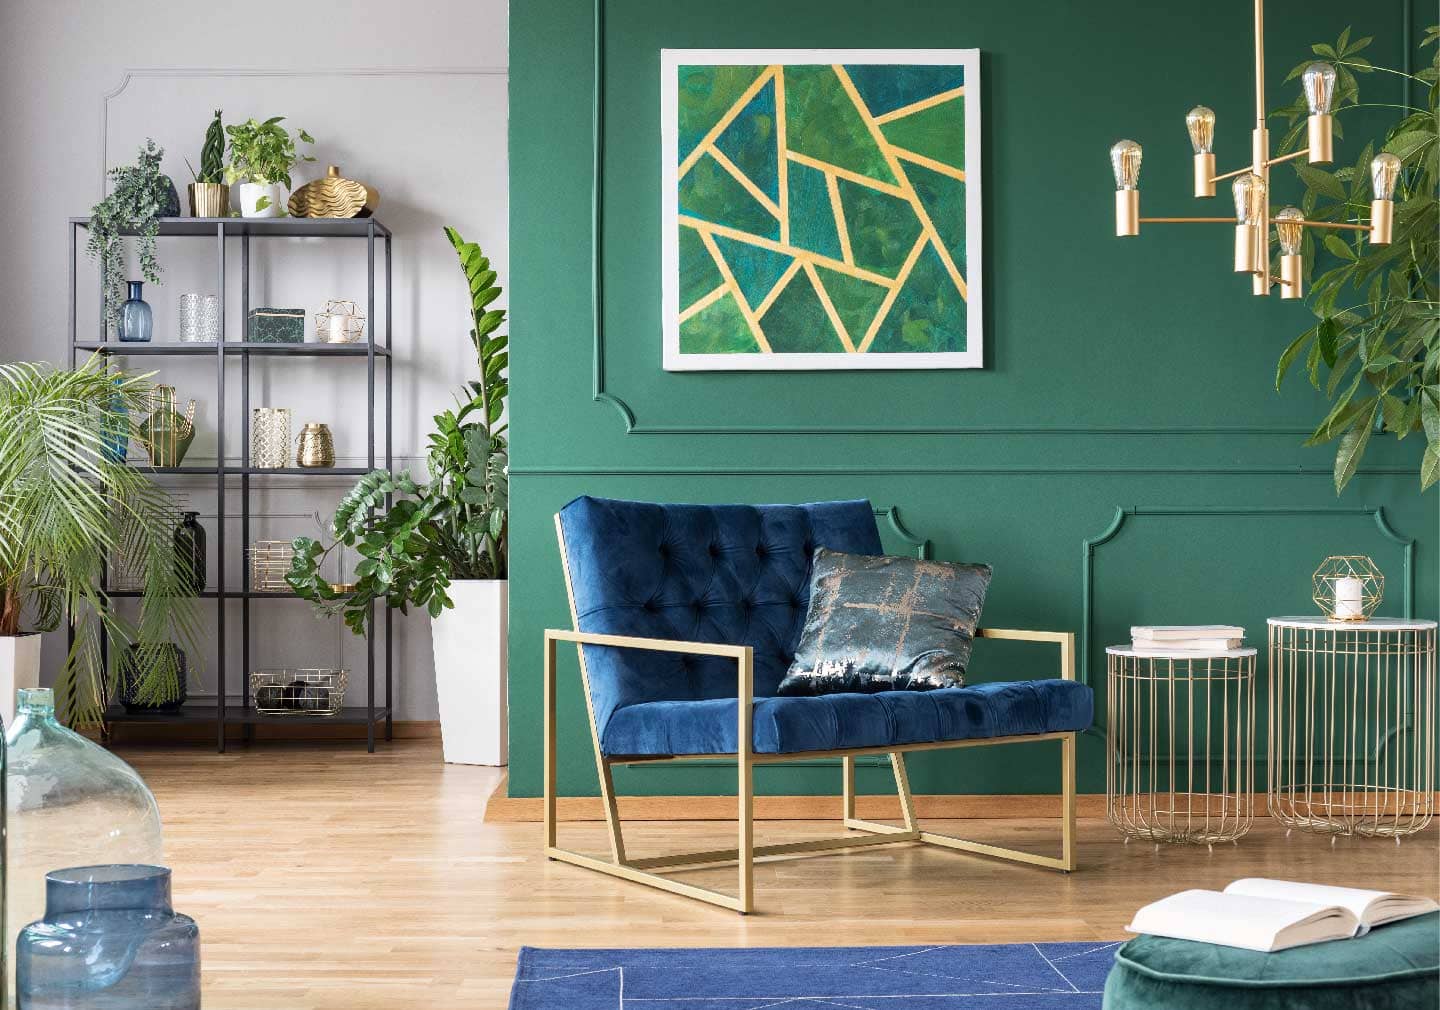 Celebrity home interiors Designs for living room with blue sofa